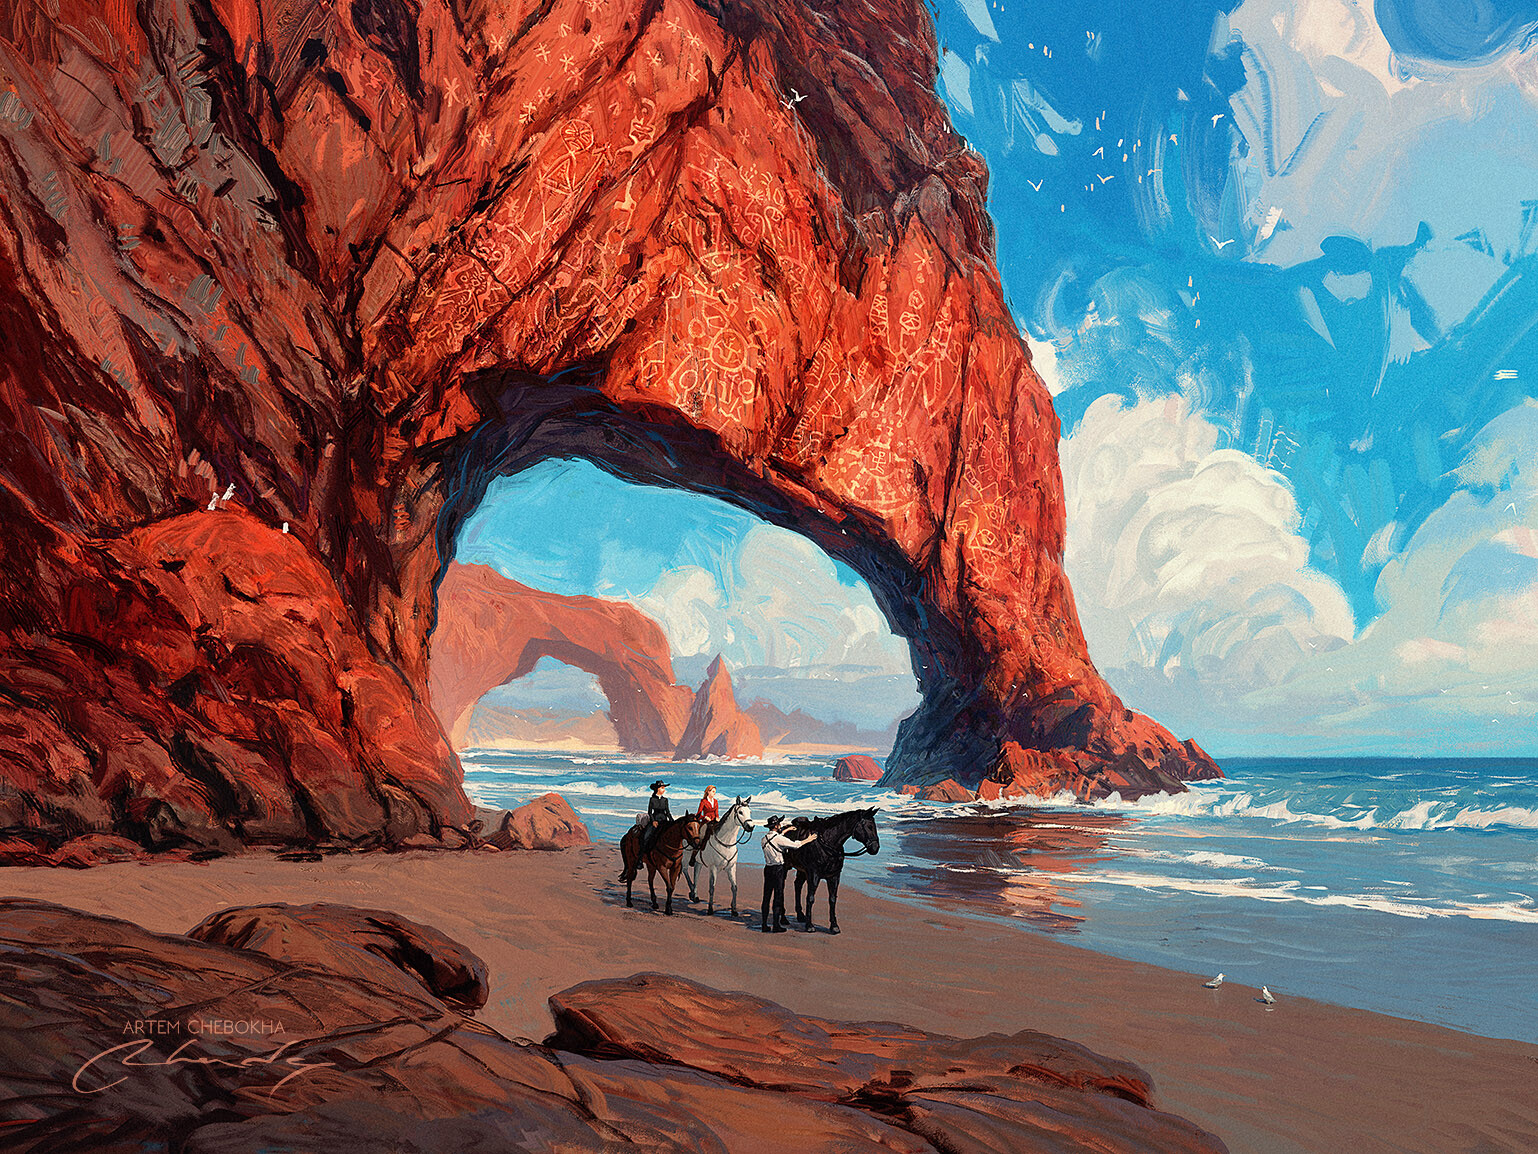 Artwork Digital Art Horse Beach Rocks Nature Artem Chebokha Sky Clouds Water Waves Sand Animals Hors 1538x1154